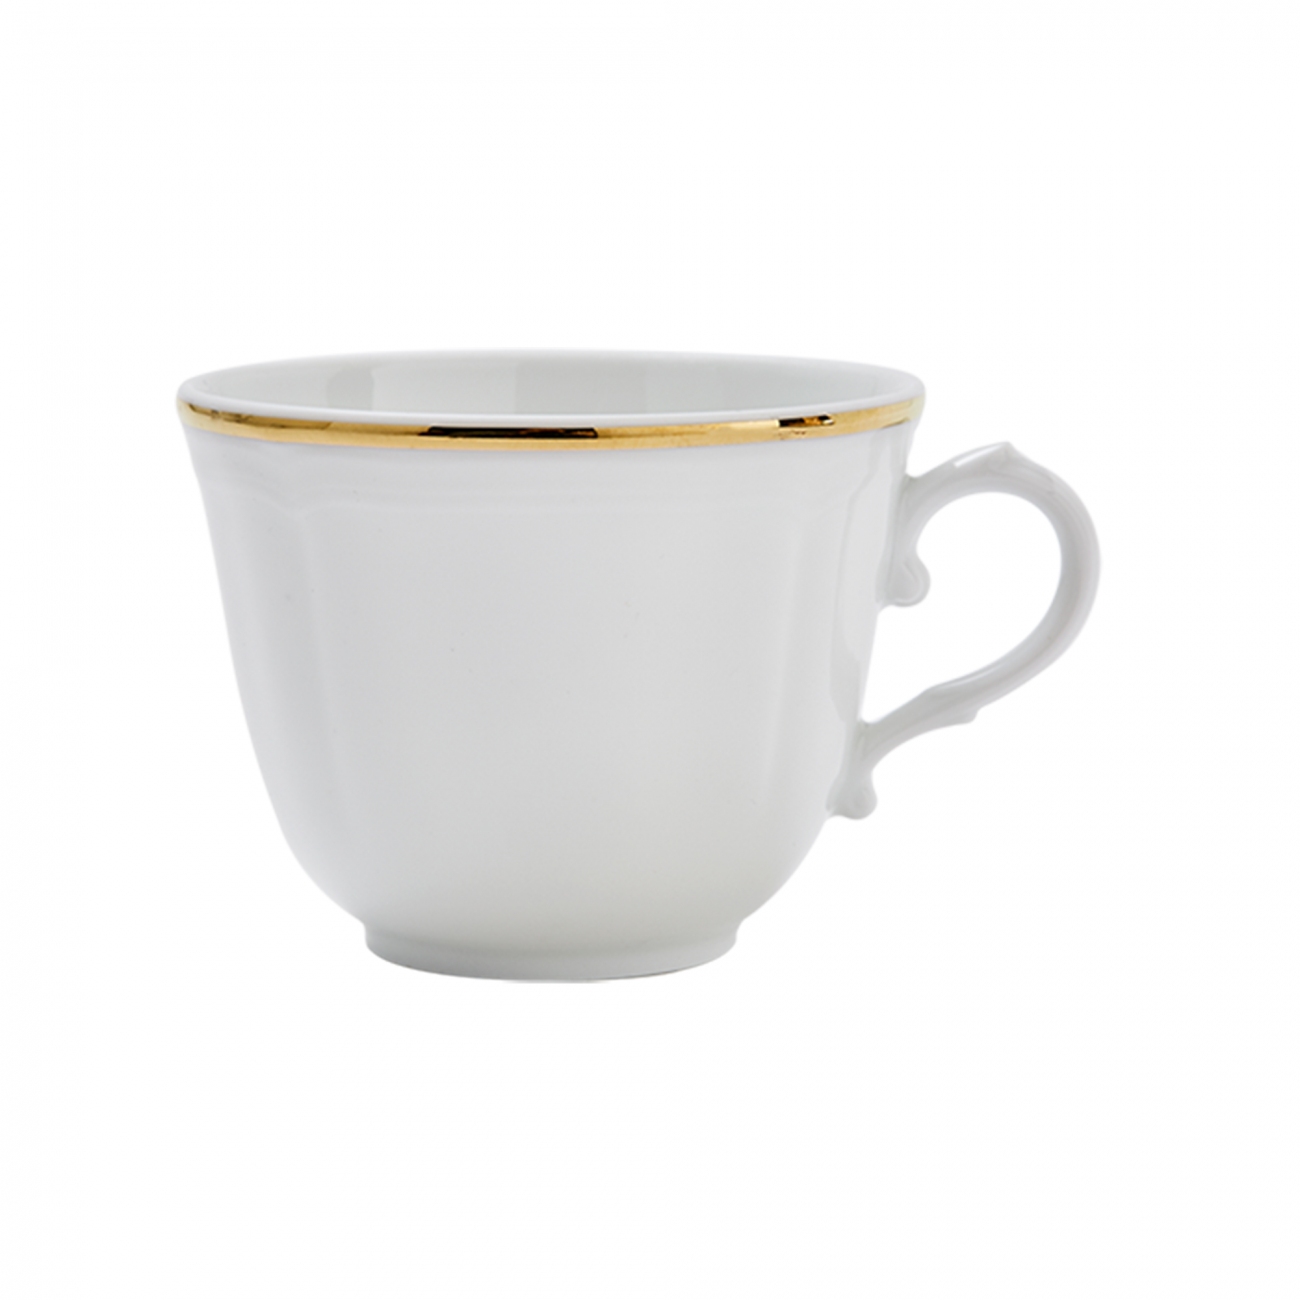 Ginori 1735 Corona Espresso cup Set of 6